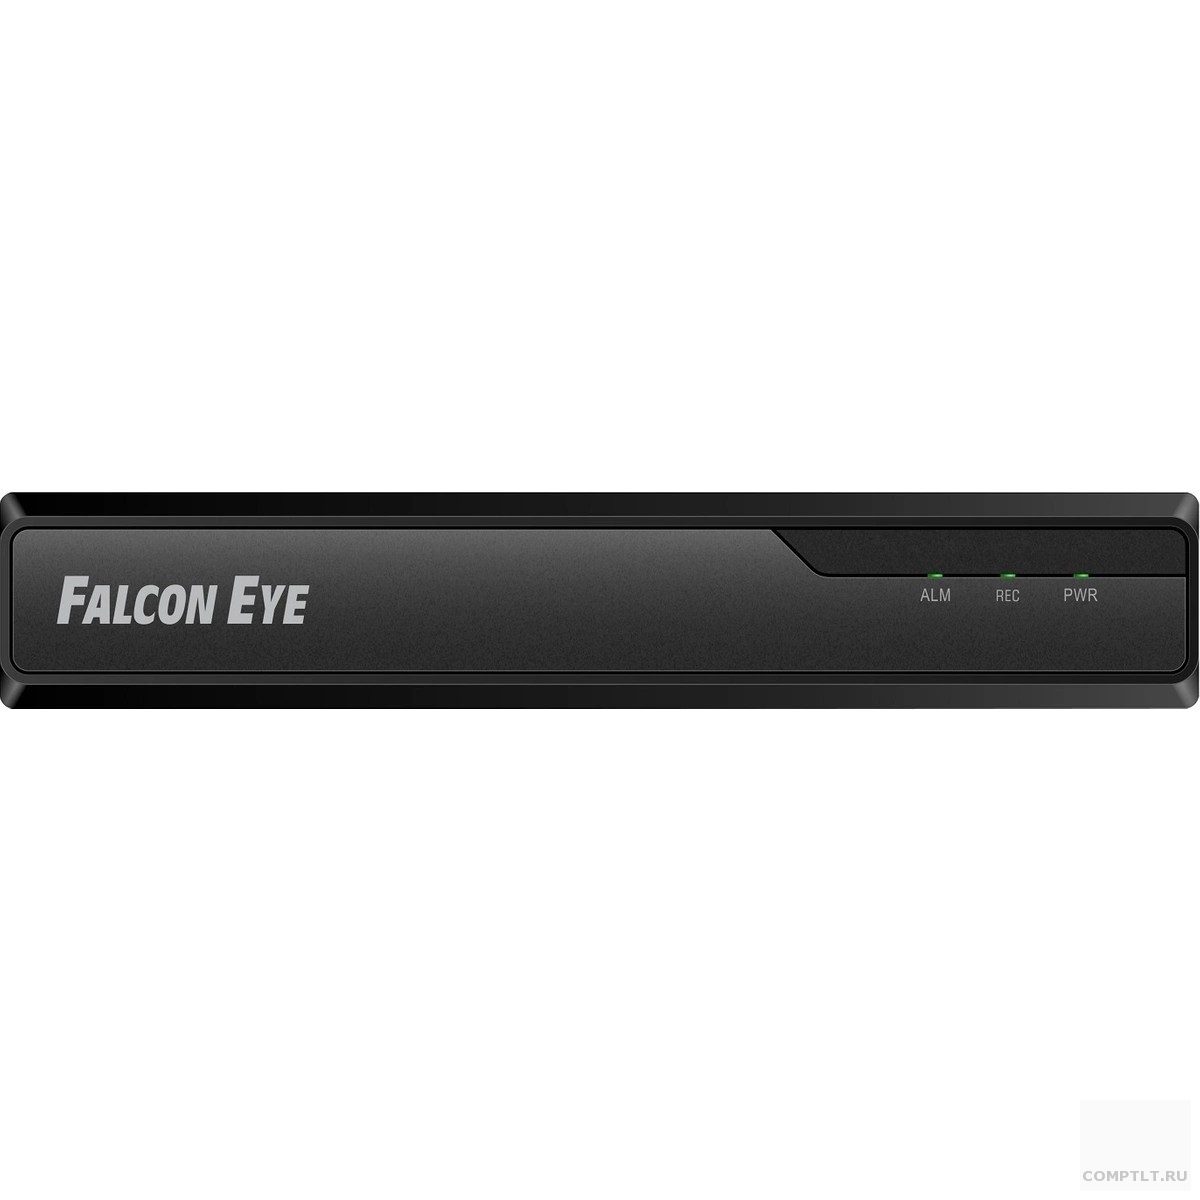 Falcon Eye FE-MHD1108 8 канальный 5 в 1 регистратор запись 8кан 1080N15k/с Н.264/H264 HDMI, VGA, SATA1 до 6Tb HDD, 2 USB Аудио 1/1 Протокол ONVIF, RTSP, P2P Мобильные платформы Android/IOS